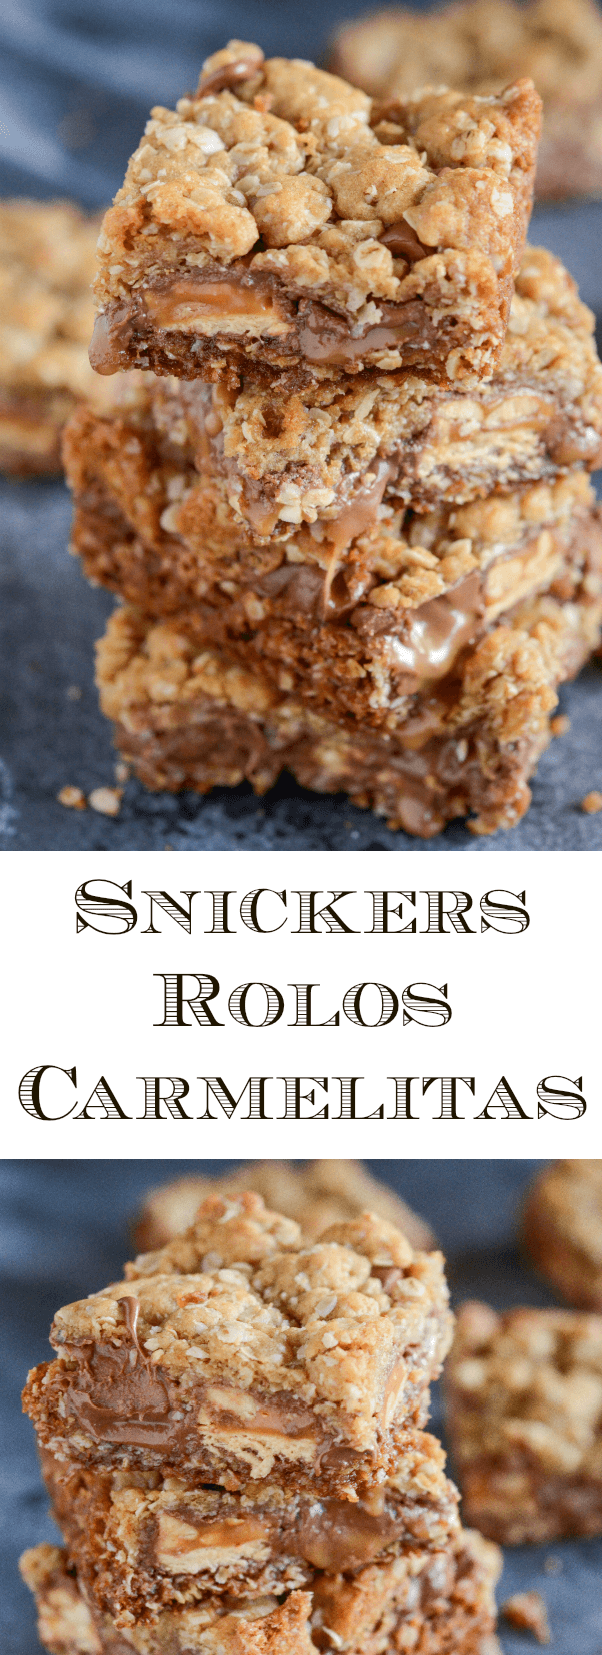 Snickers Rolos Carmelitas Recipe